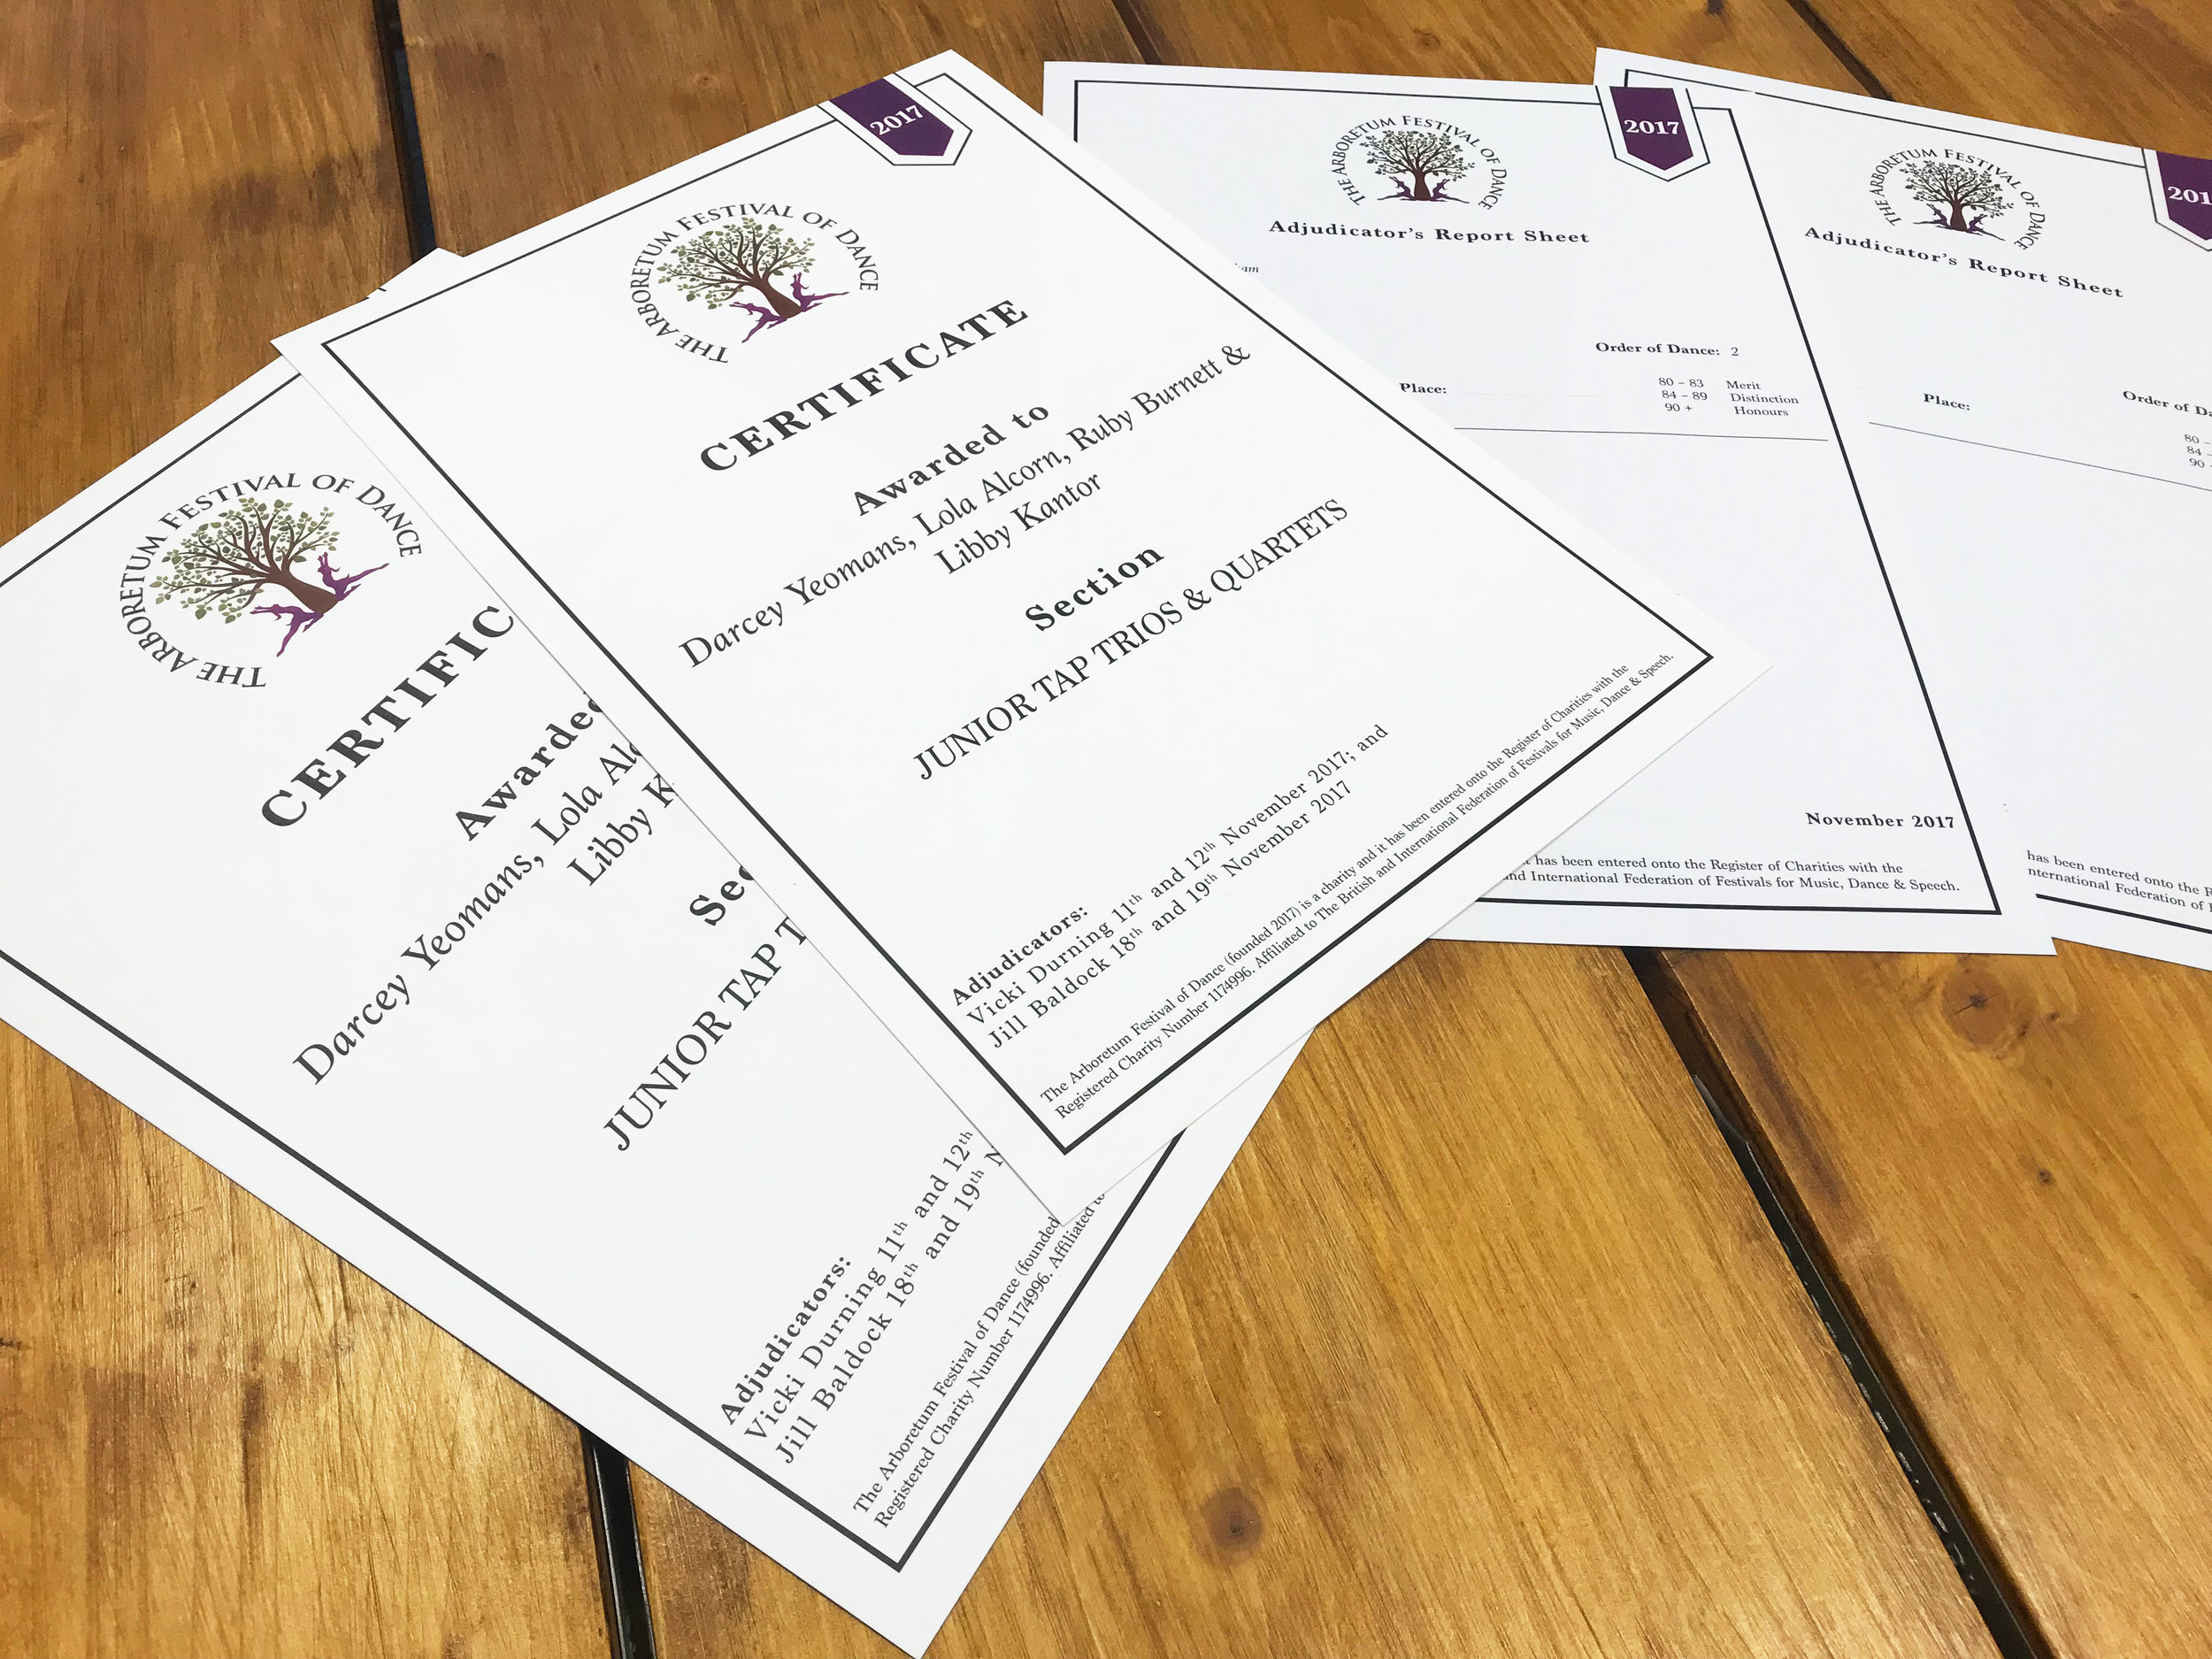 Printed Dance Festival Programme & Certificates 